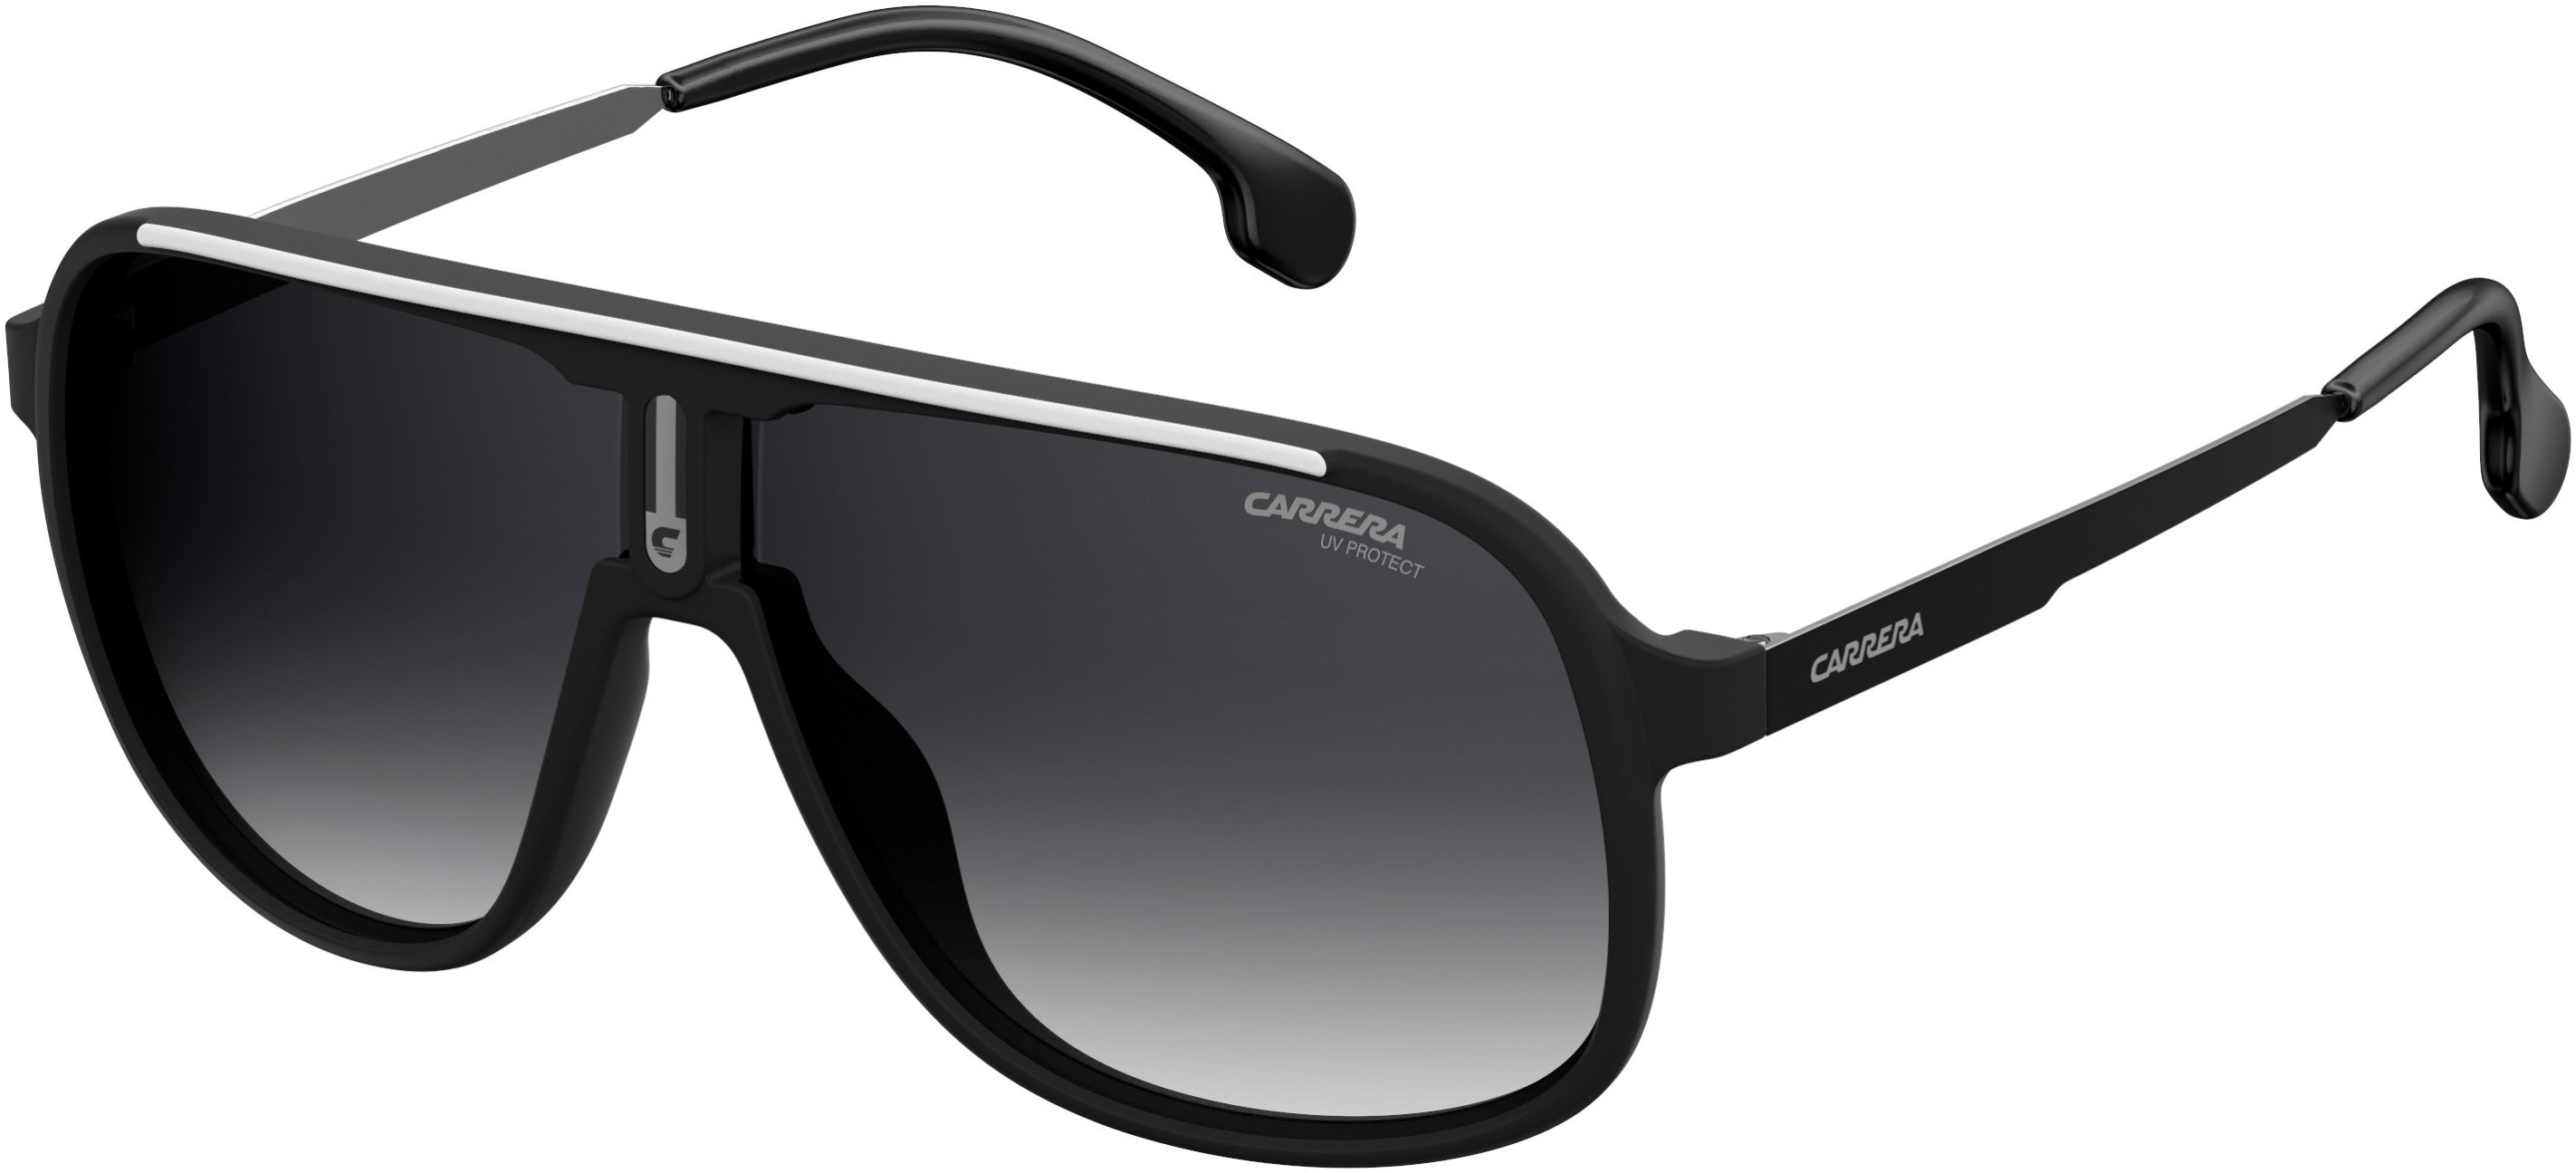  Carrera 1007/S Rectangular Sunglasses 0003-0003  Matte Black (9O Dark Gray Gradient)